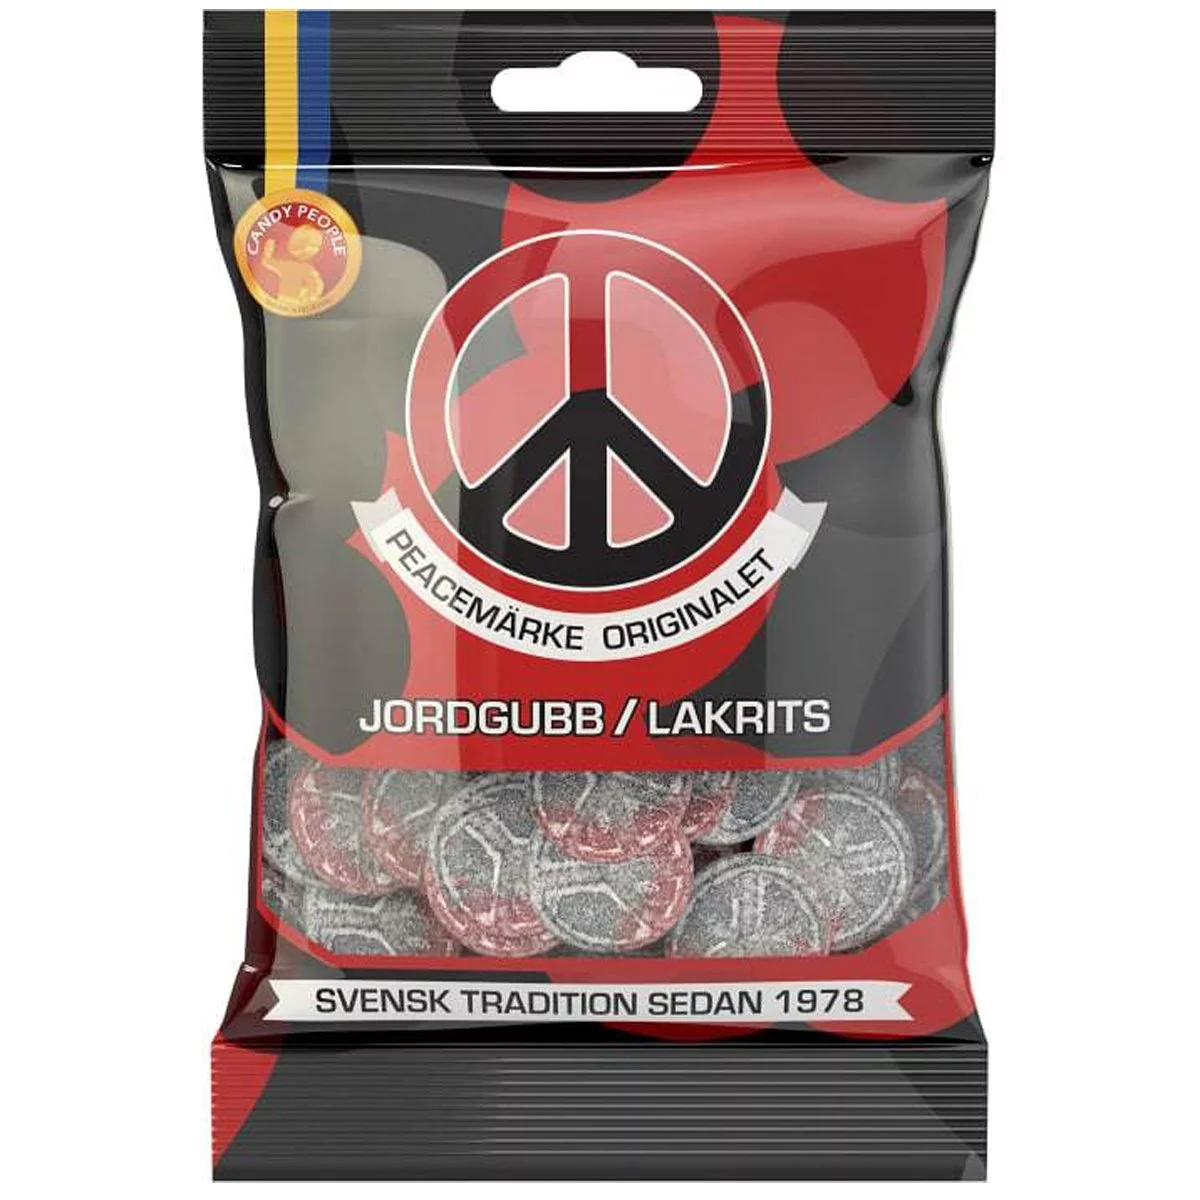 Candypeople Peacemärke Jordgubb / Lakrits - Erdbeer / Lakritz (80g) 1